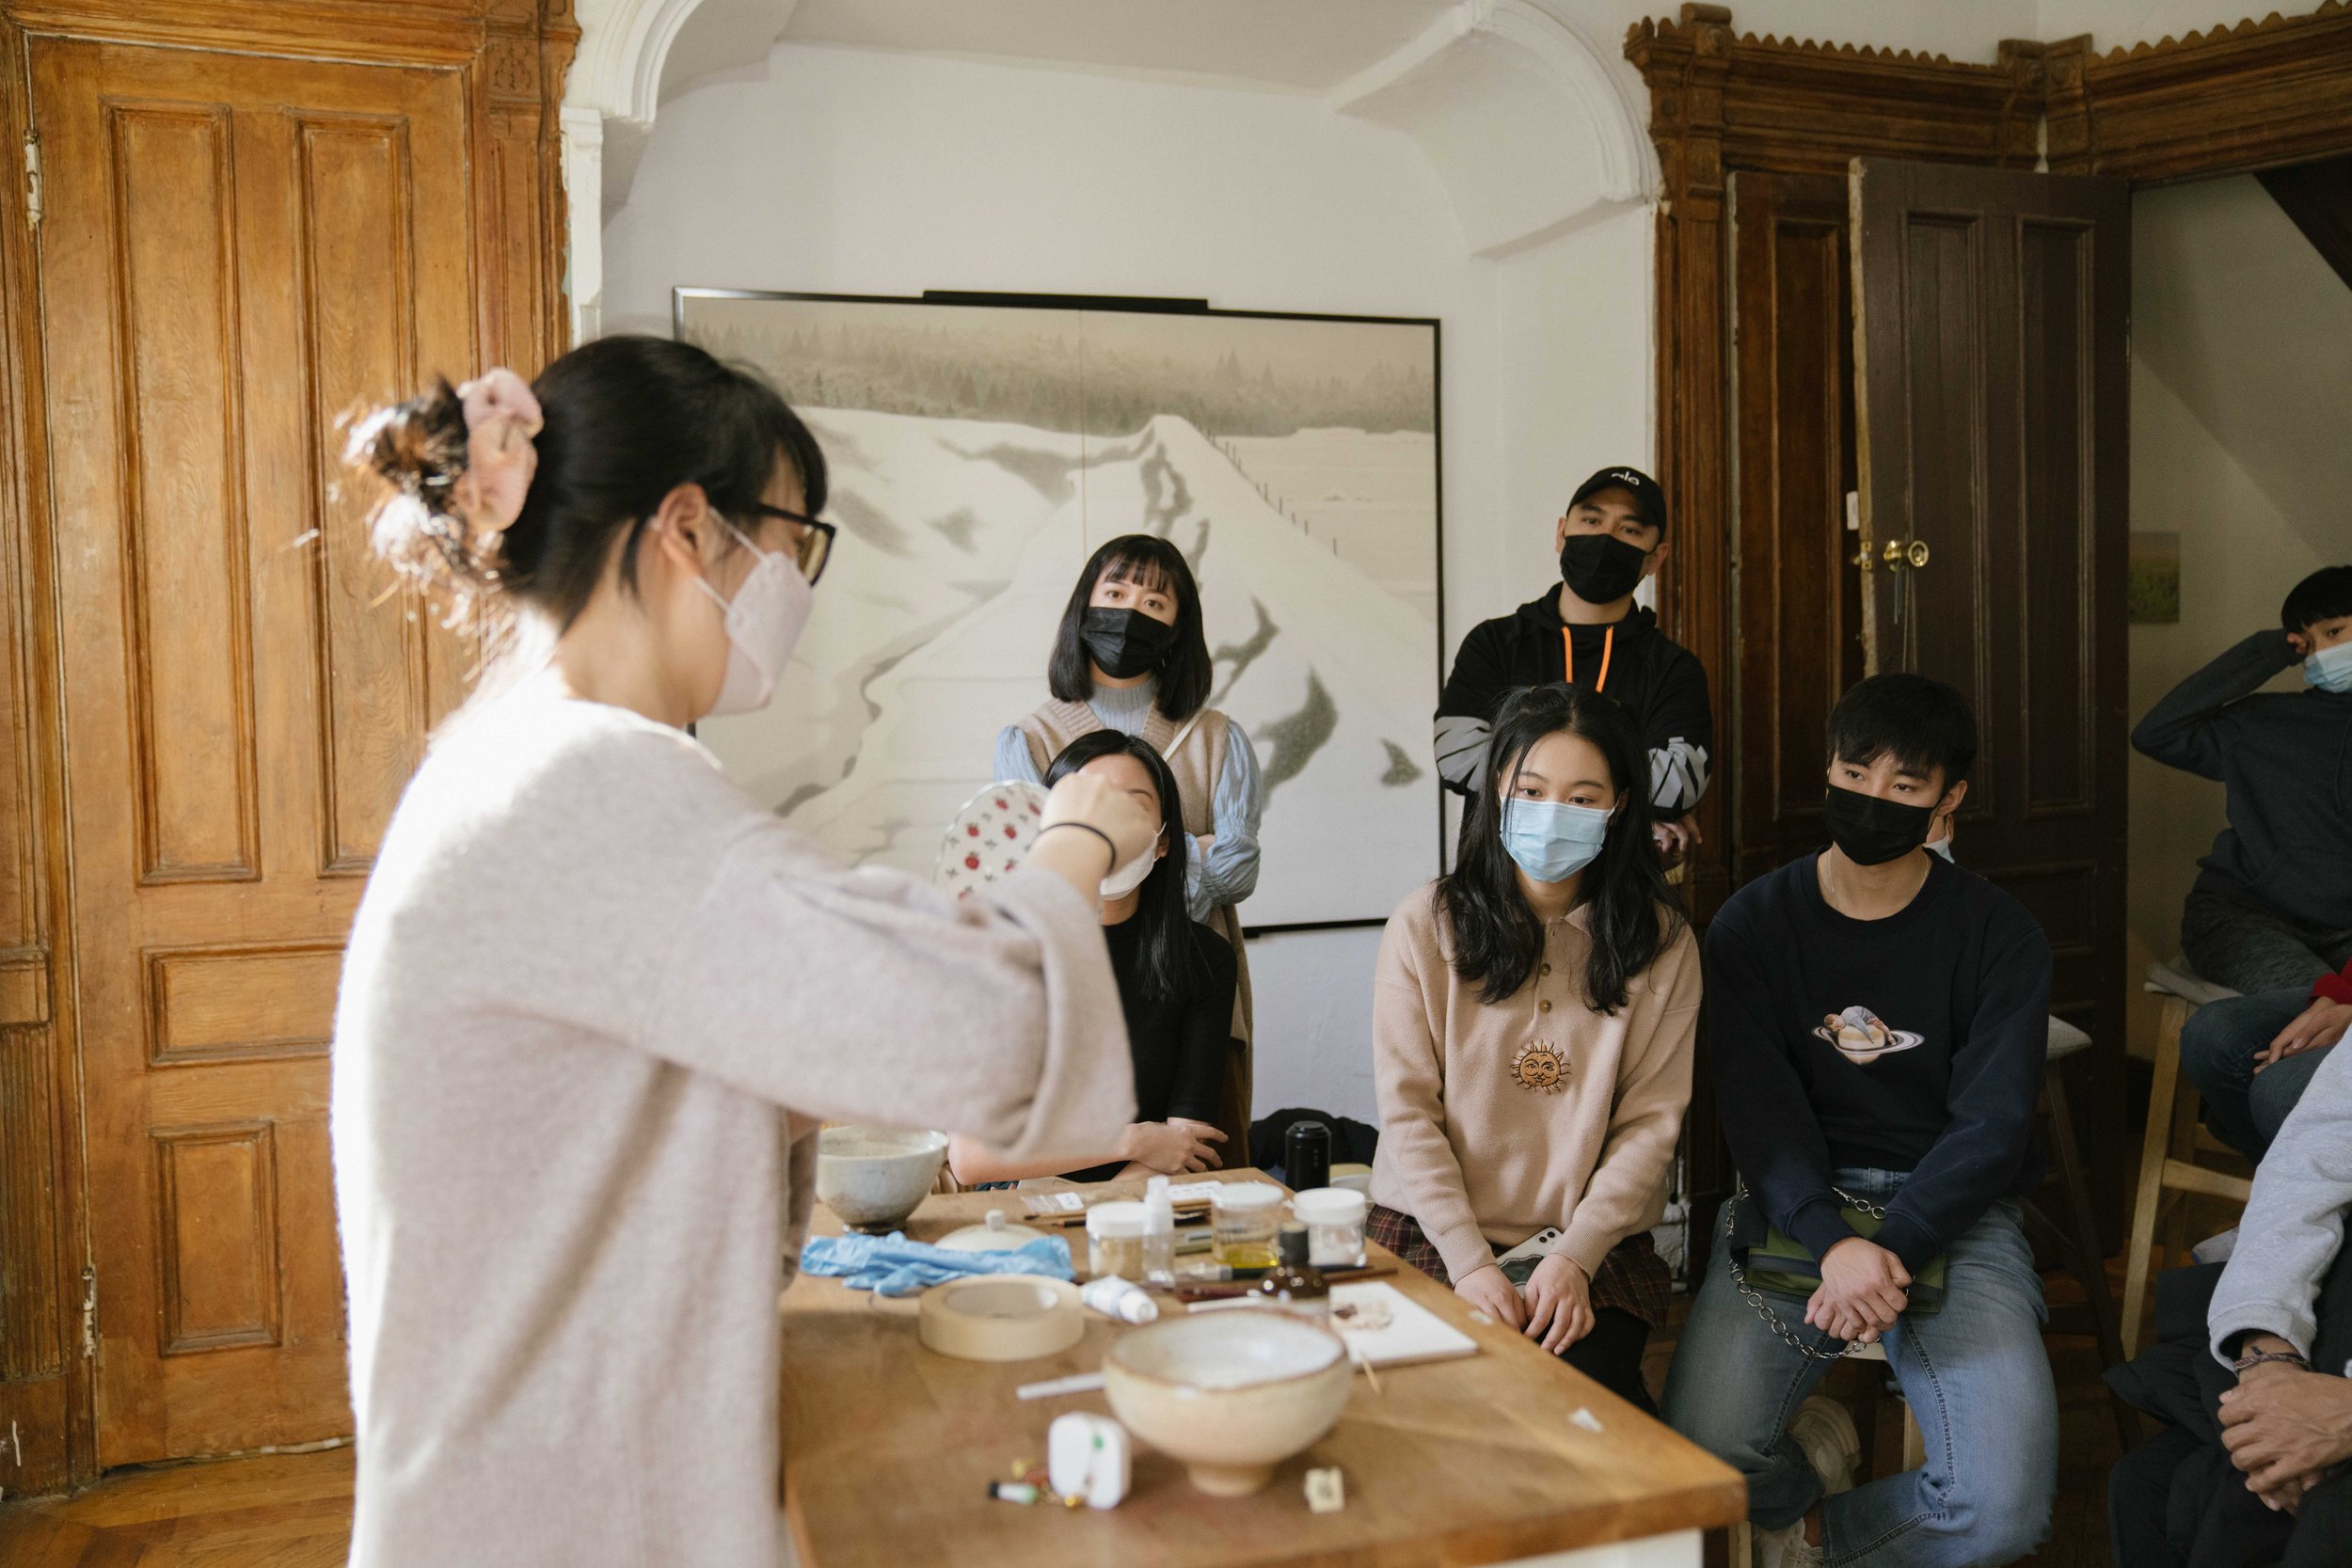  Kintsugi Workshop on Feb 19th, 2022. Photo by Joey Wang, courtesy of Fou Gallery 